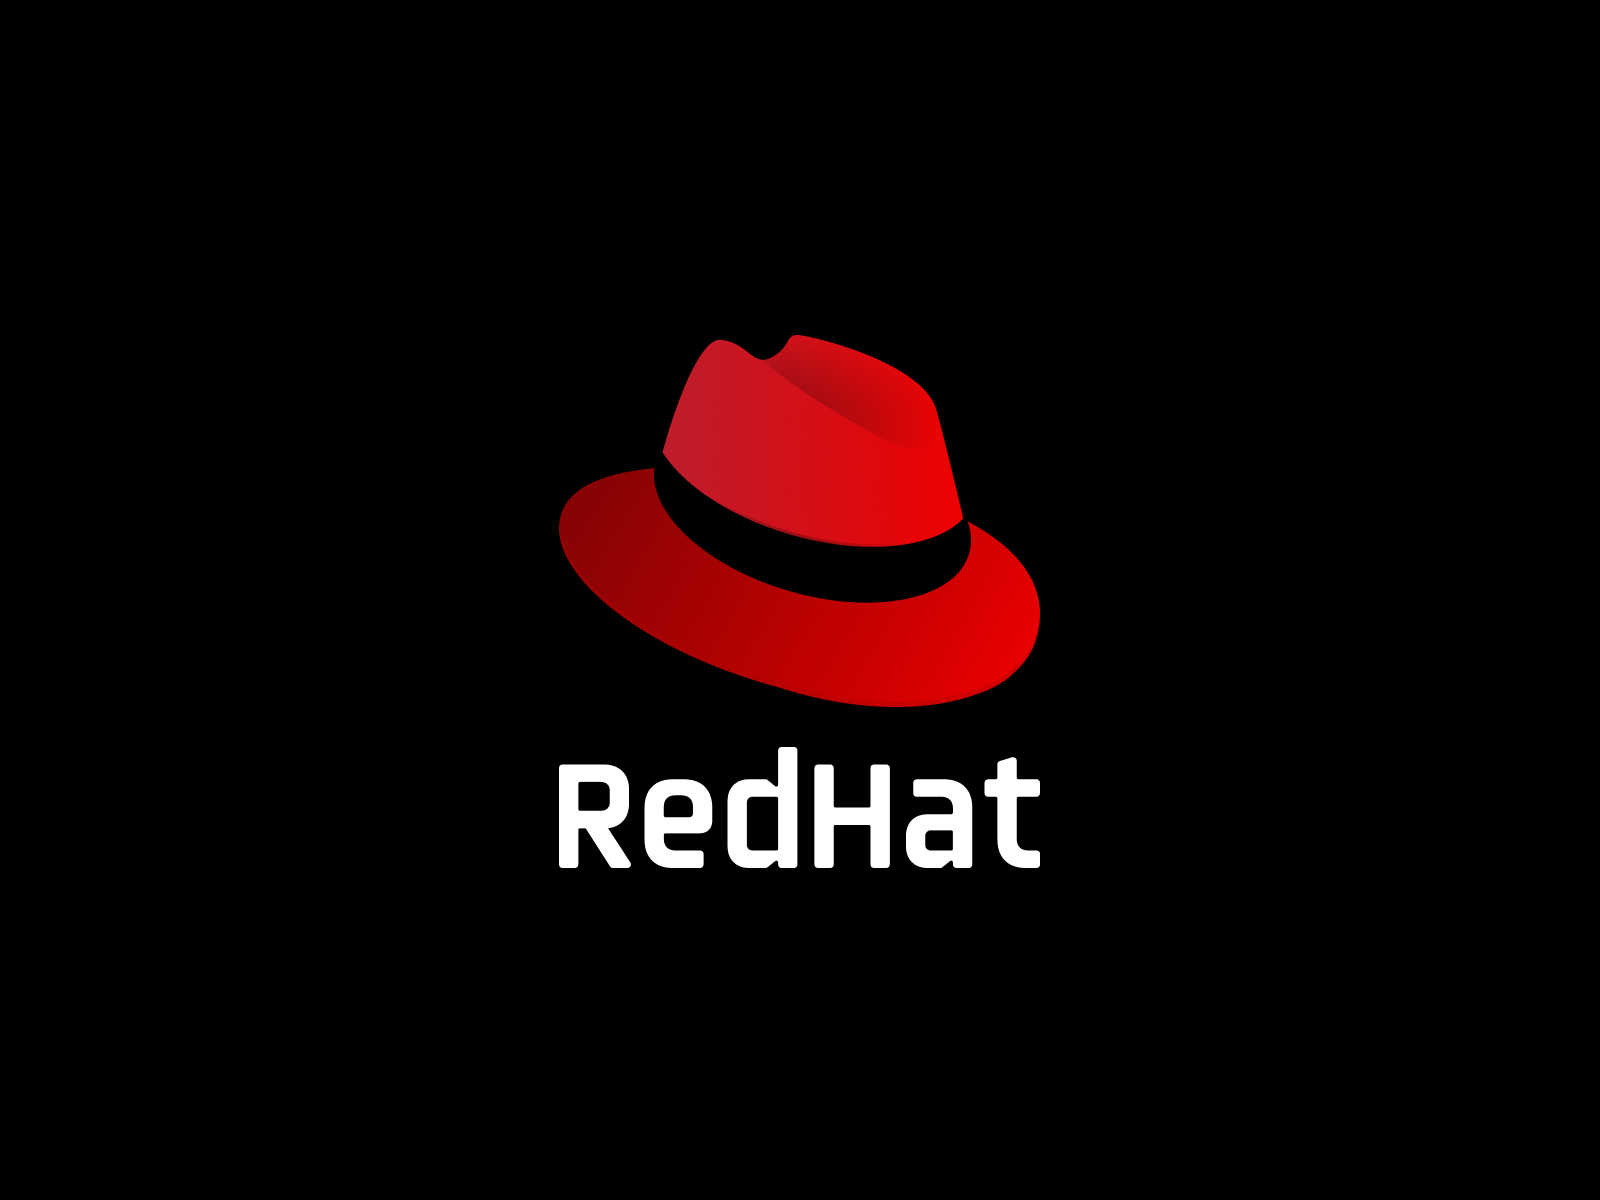 Ред хат. Red hat. Шляпа Red hat. Red hat лого. Дистрибутив Red hat.